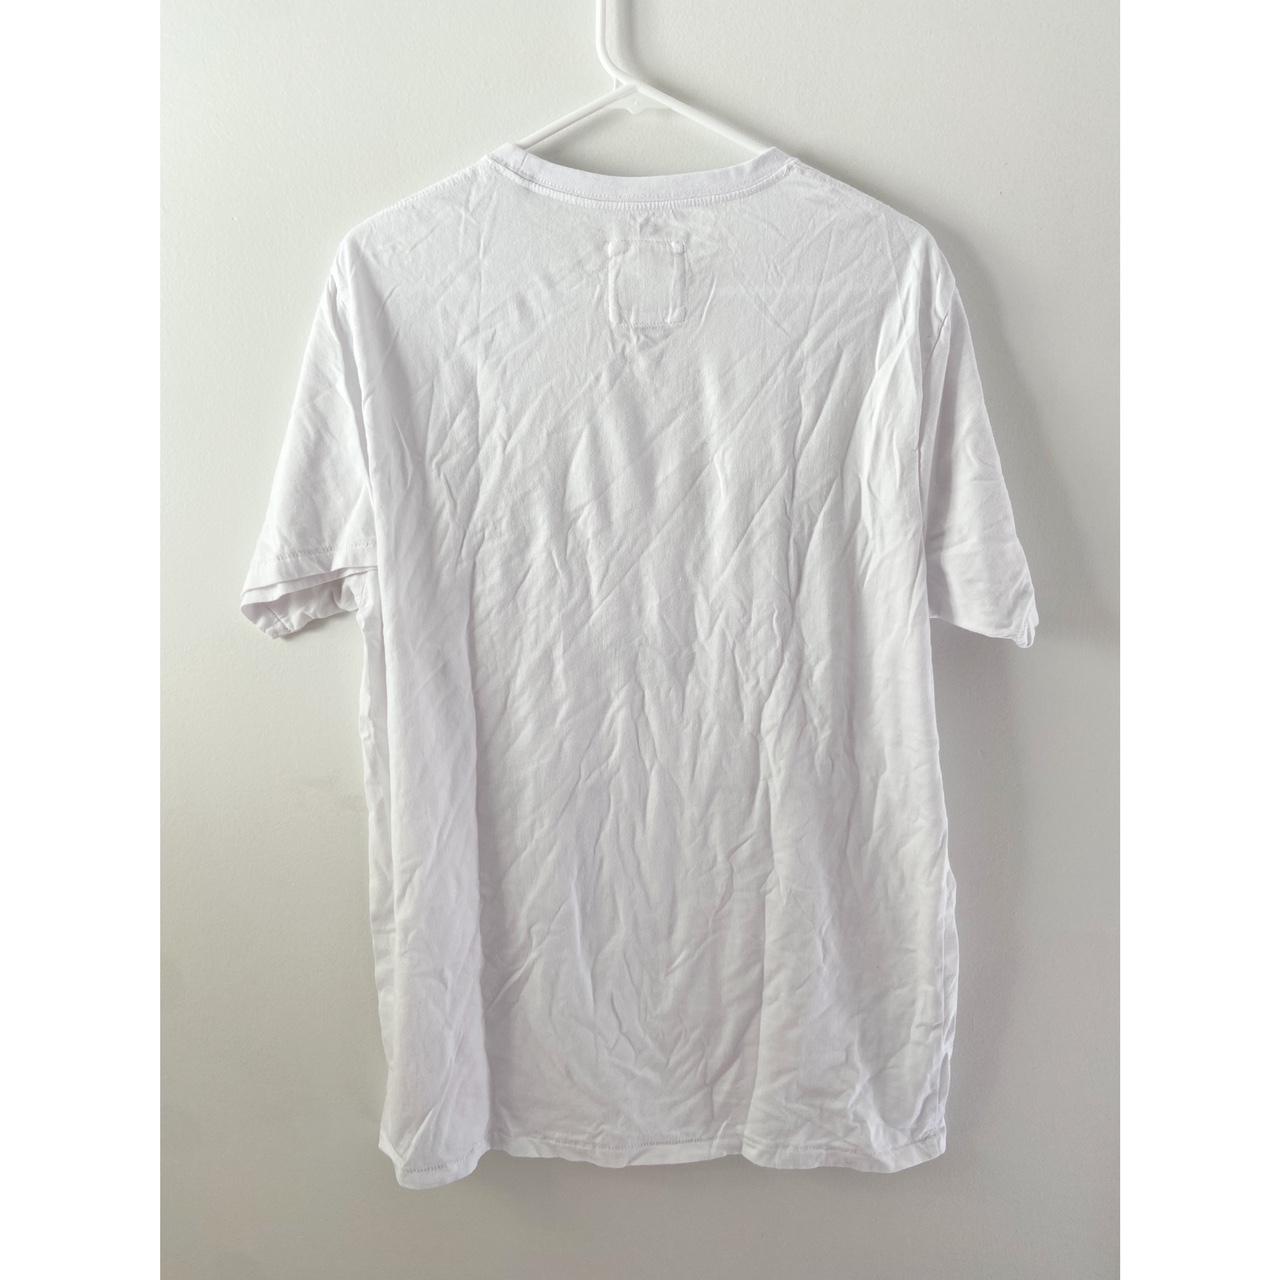 Barney Cools Men's White T-shirt (3)